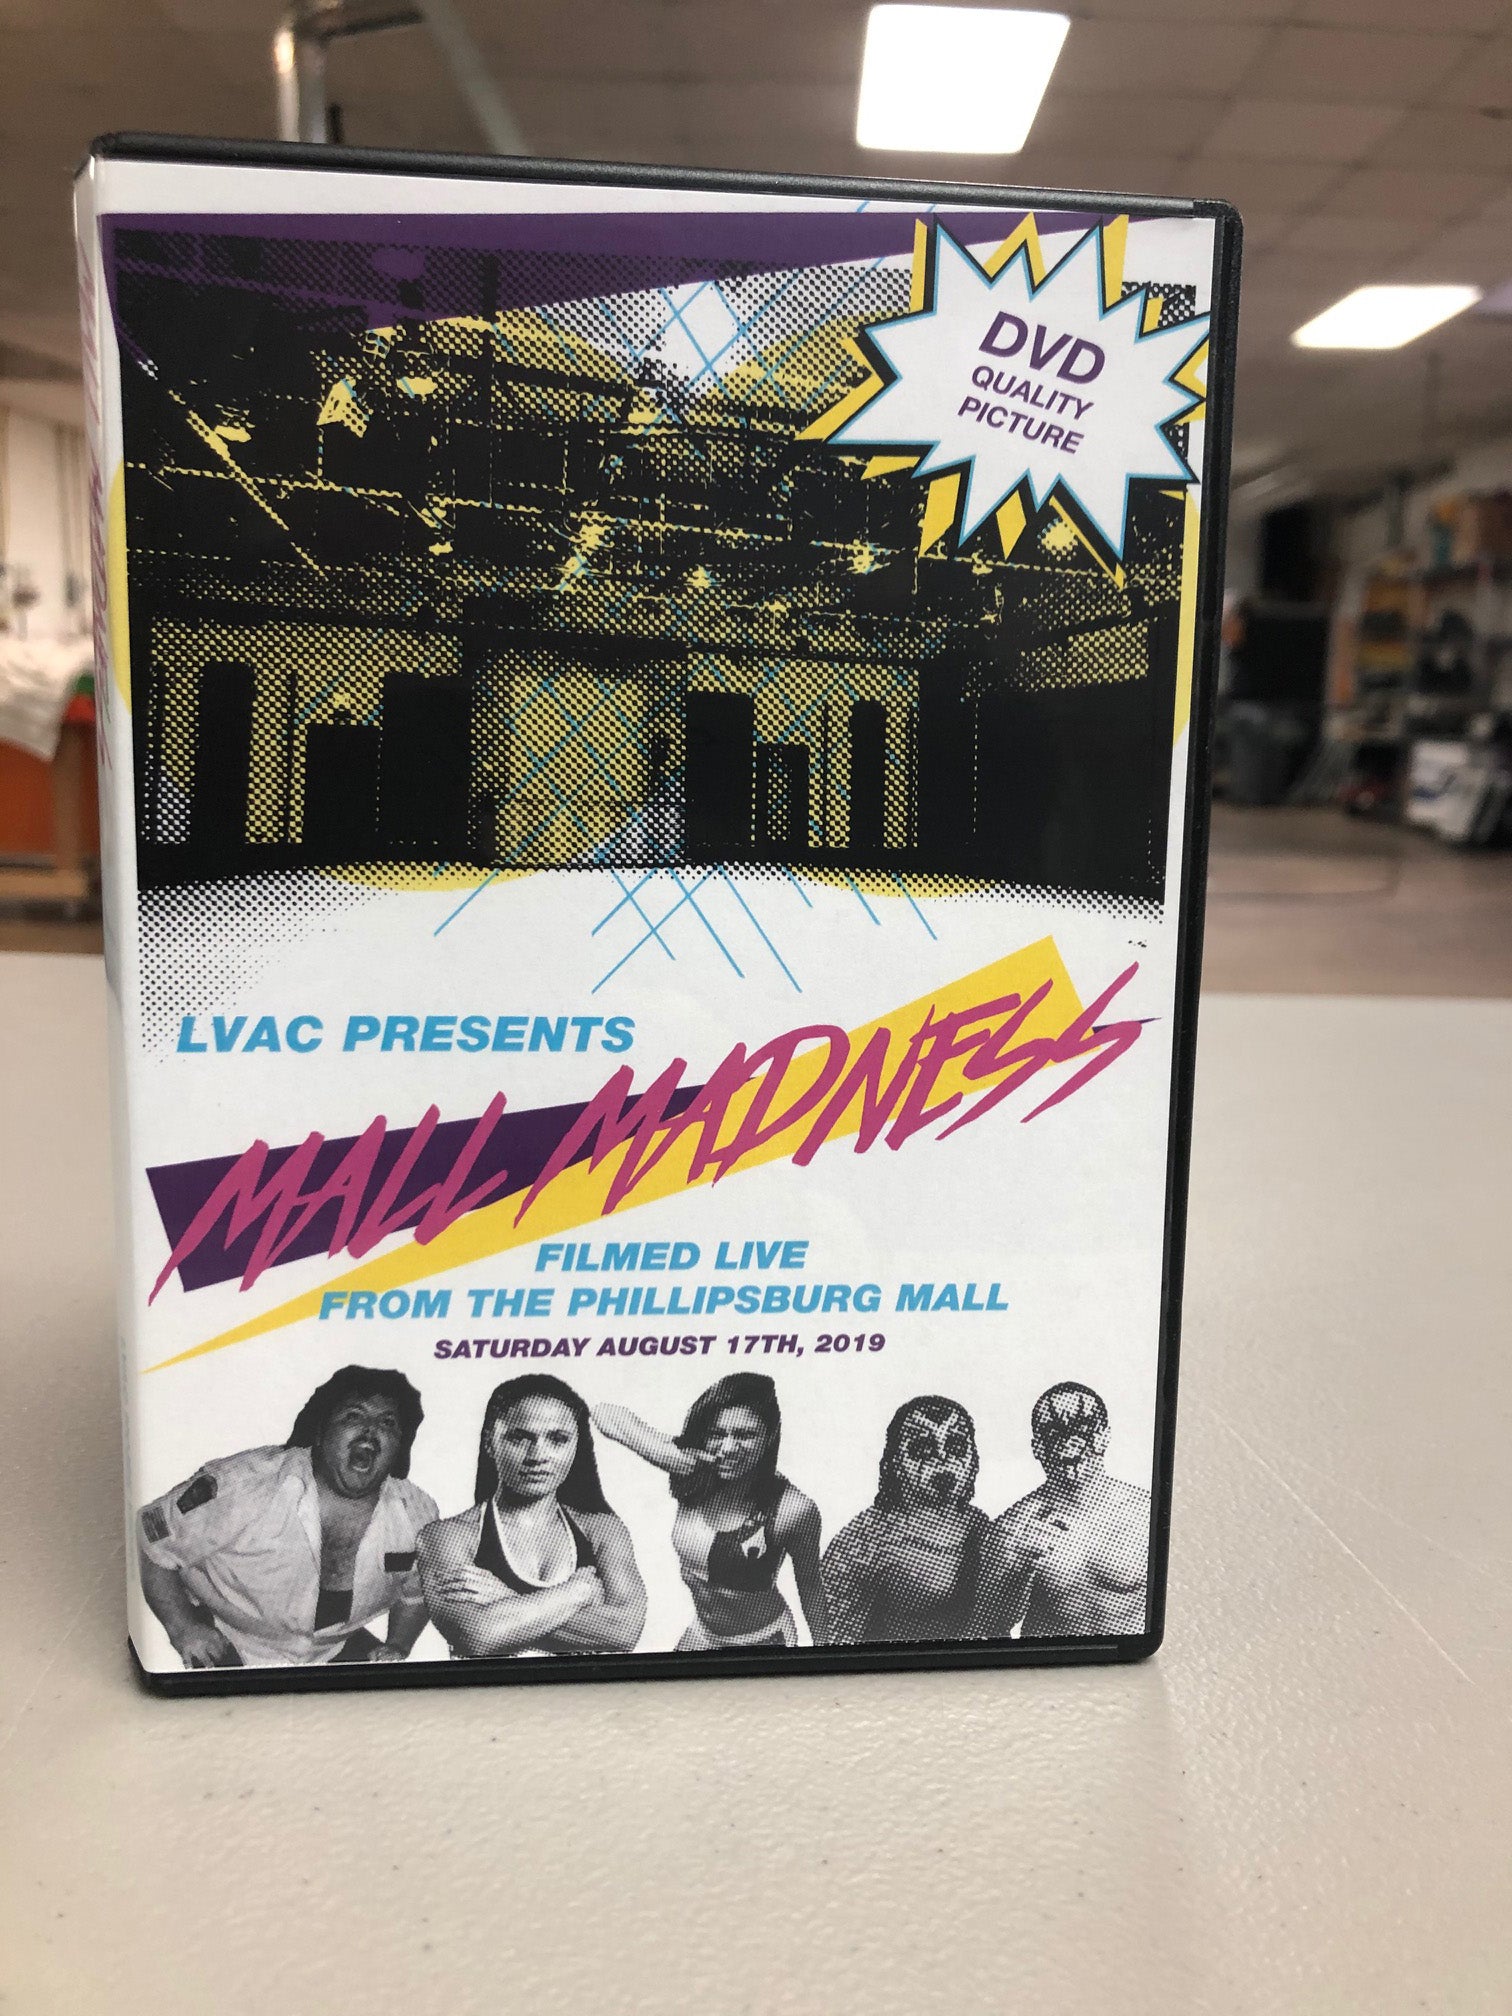 Mall Madness 2019 DVD